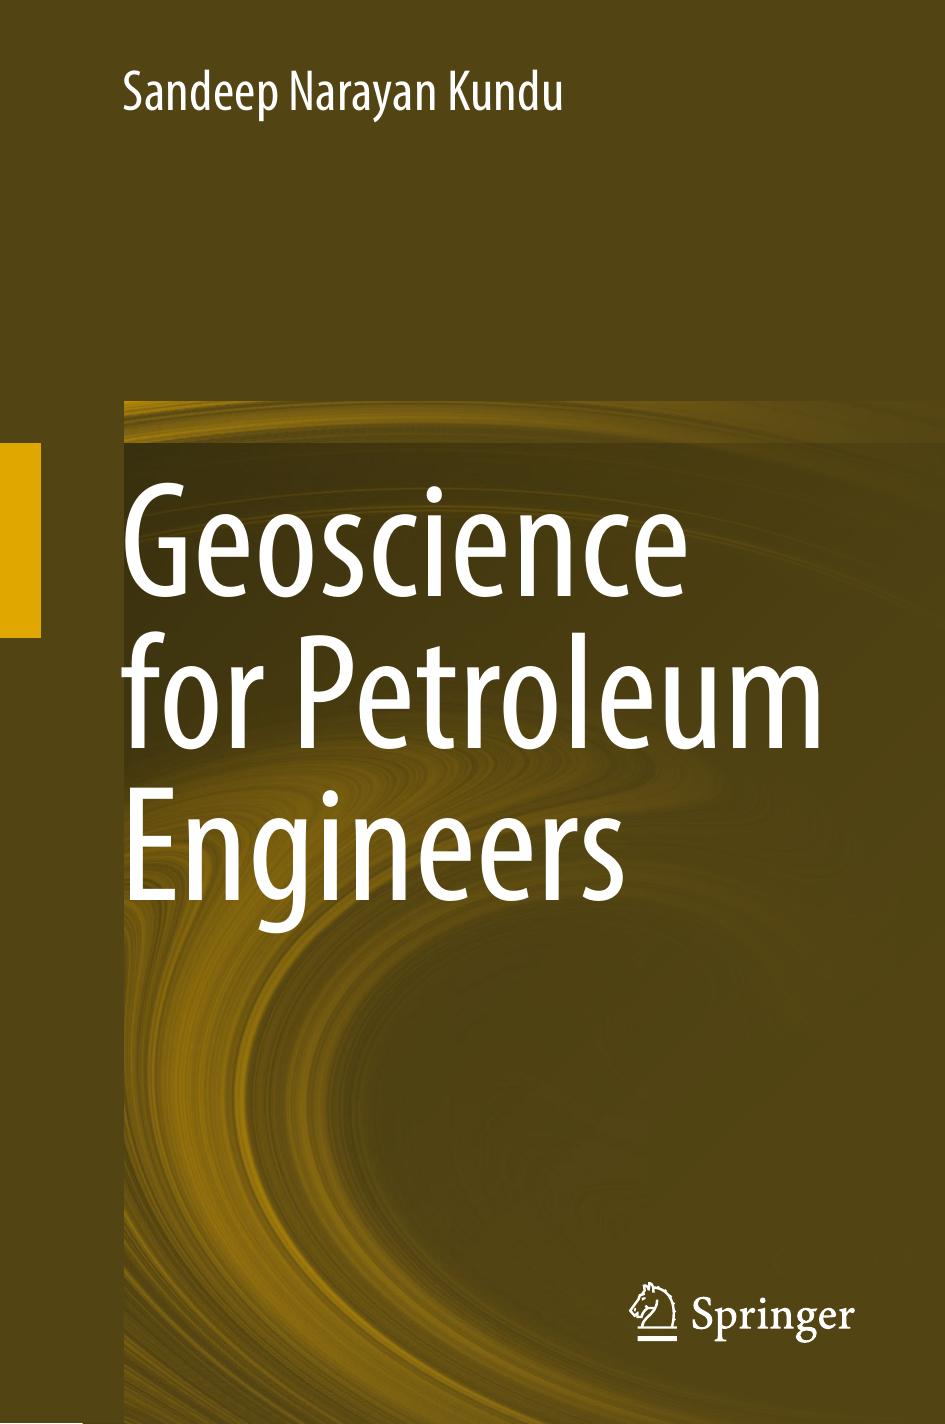 Geoscience for Petroleum Engineers by Sandeep Narayan Kundu